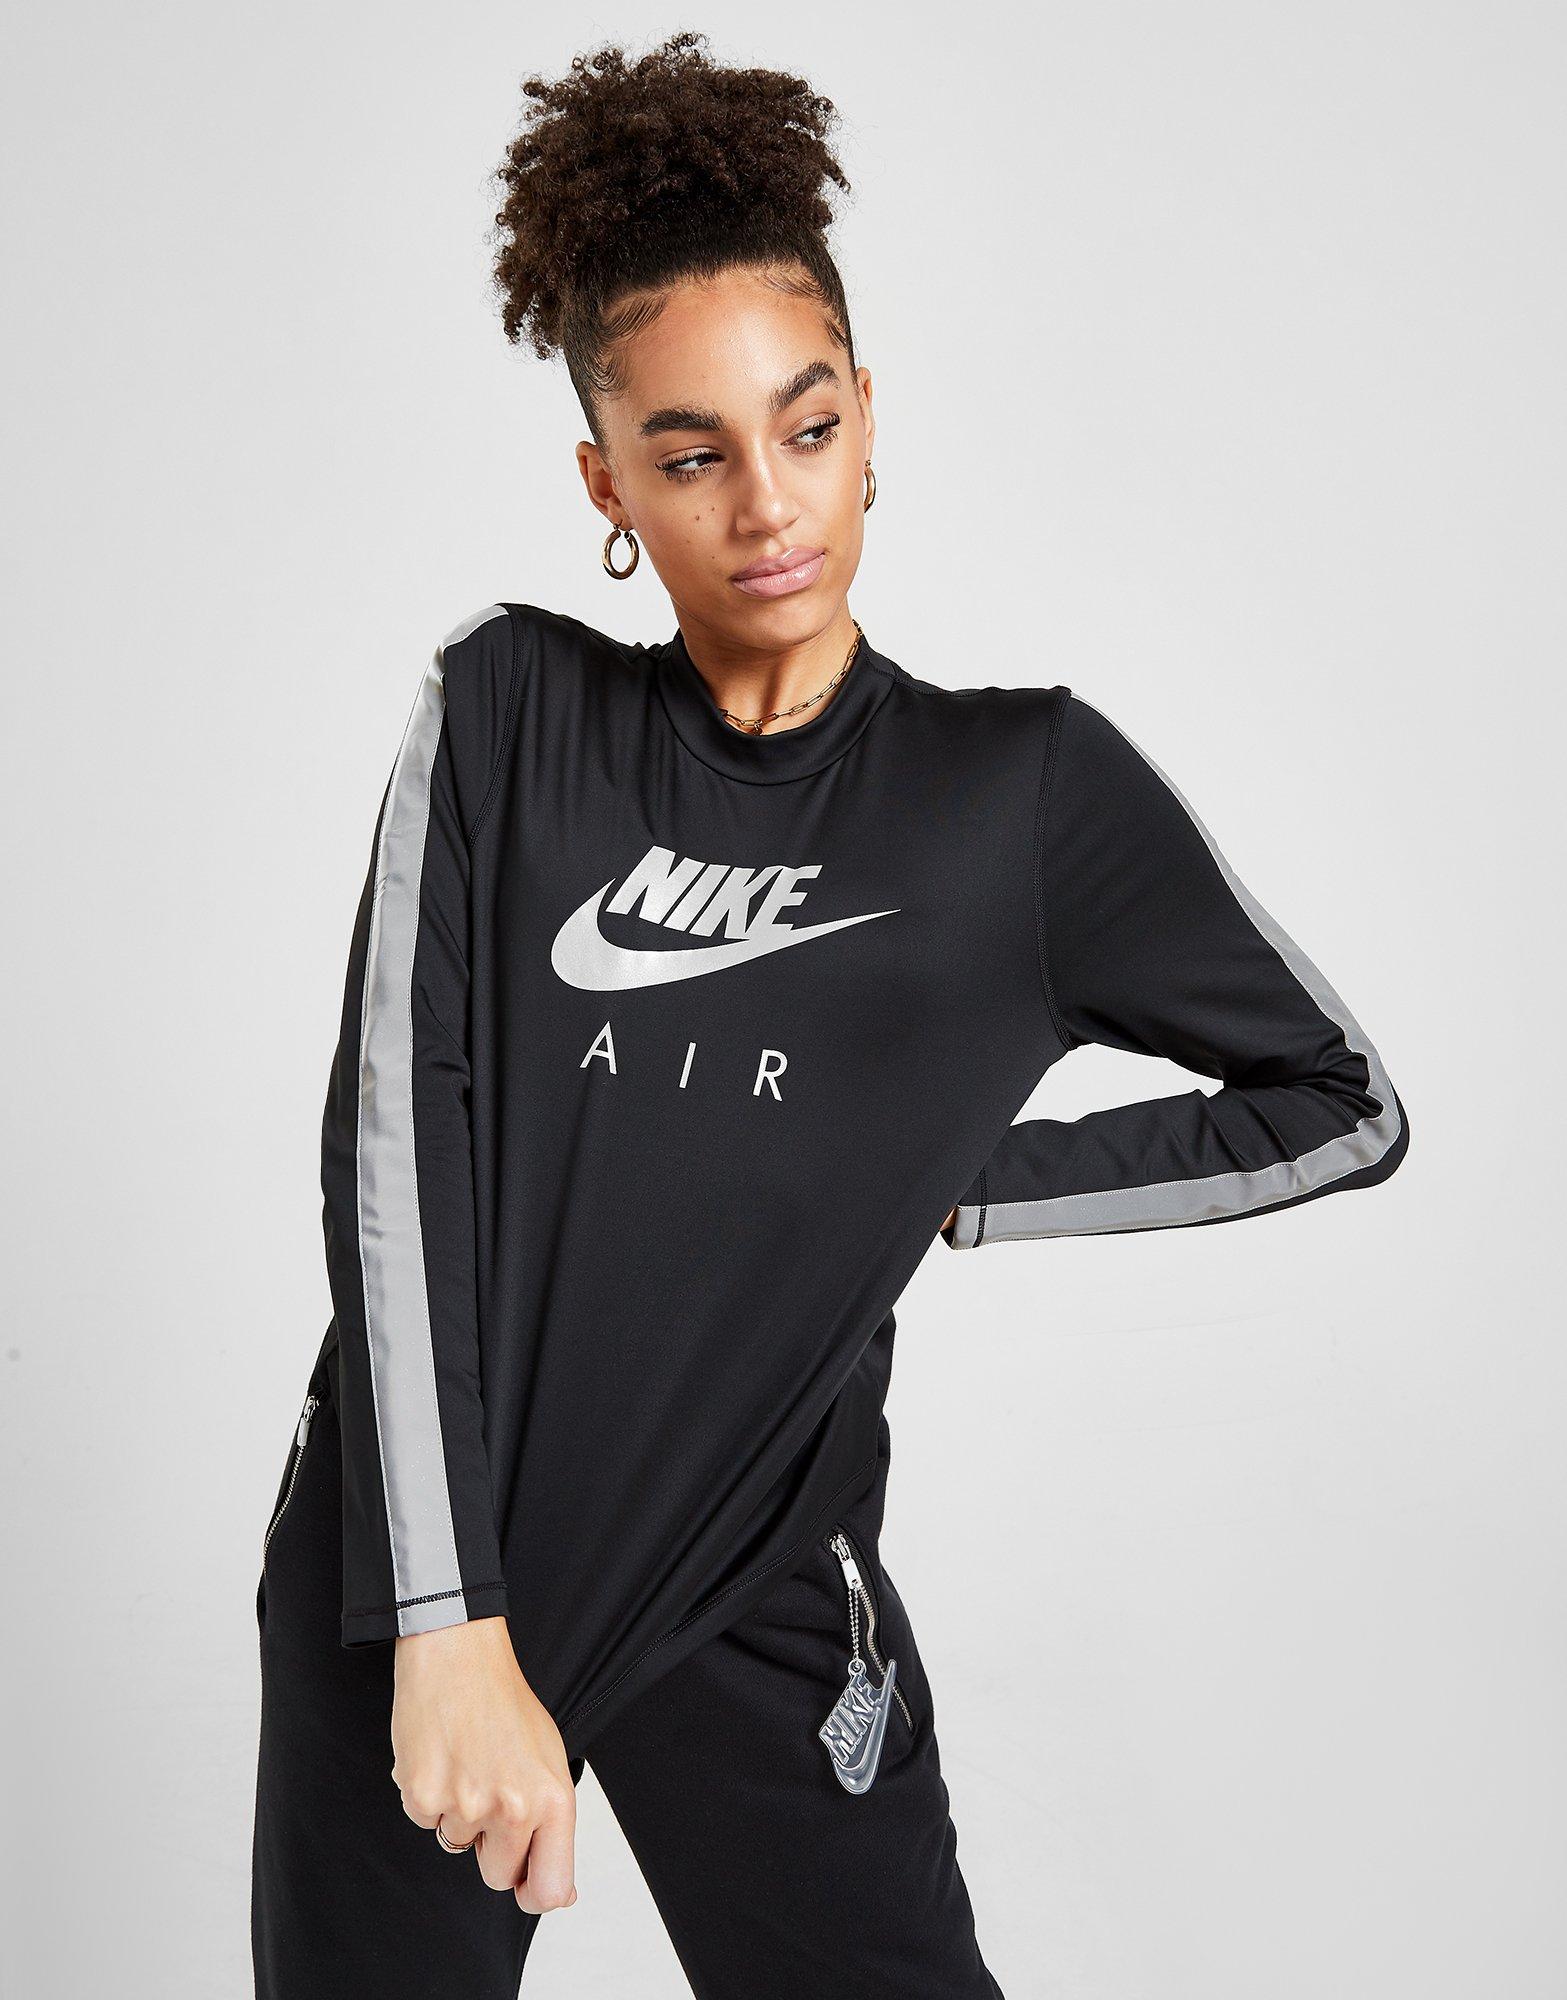 Nike Air Running Long Sleeve Top